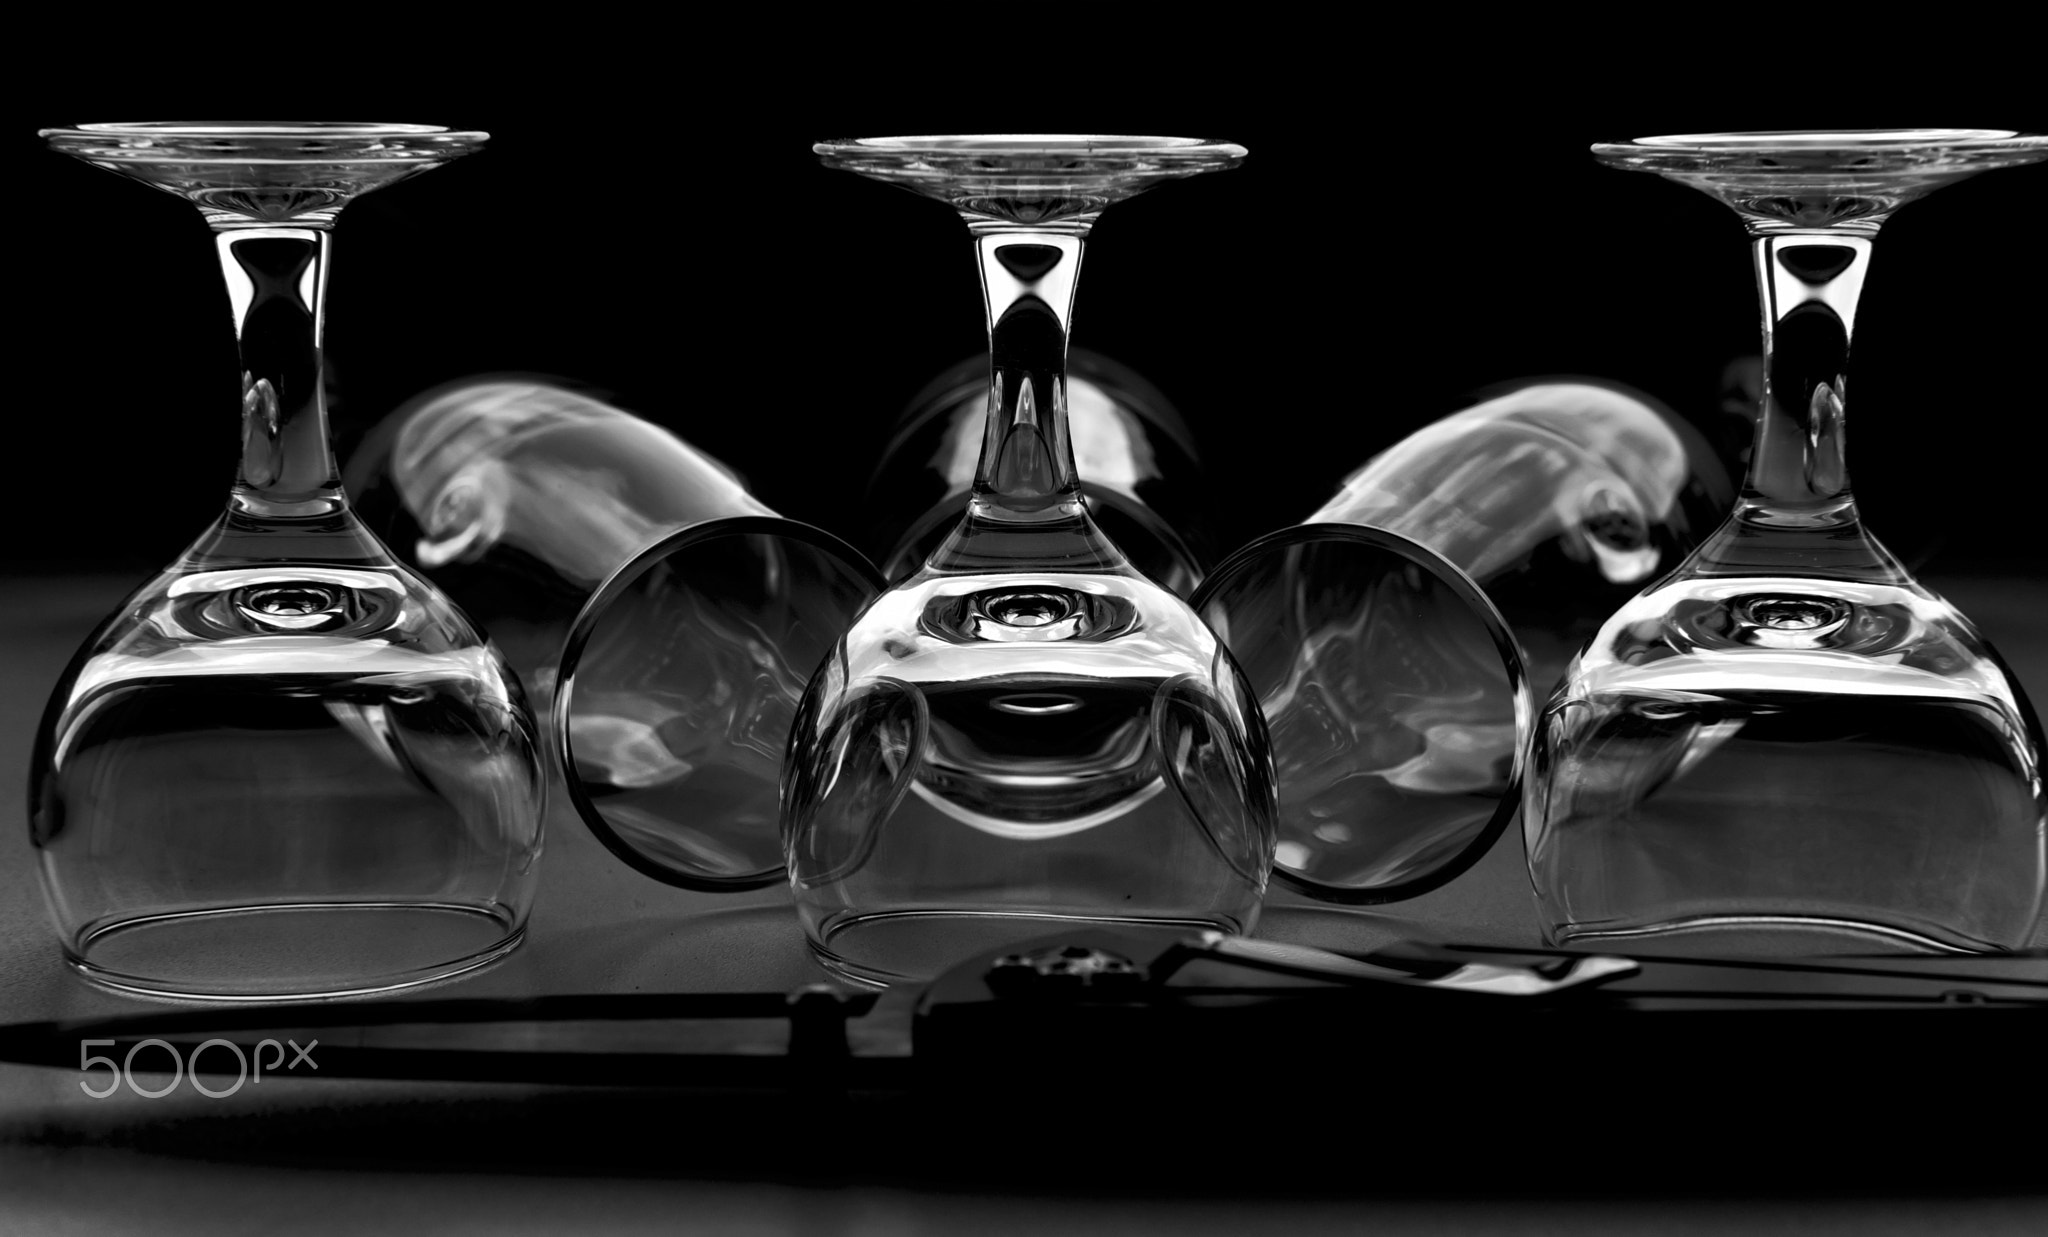 wine glass art for interiors , fujifilm x-pro2 acros black and white